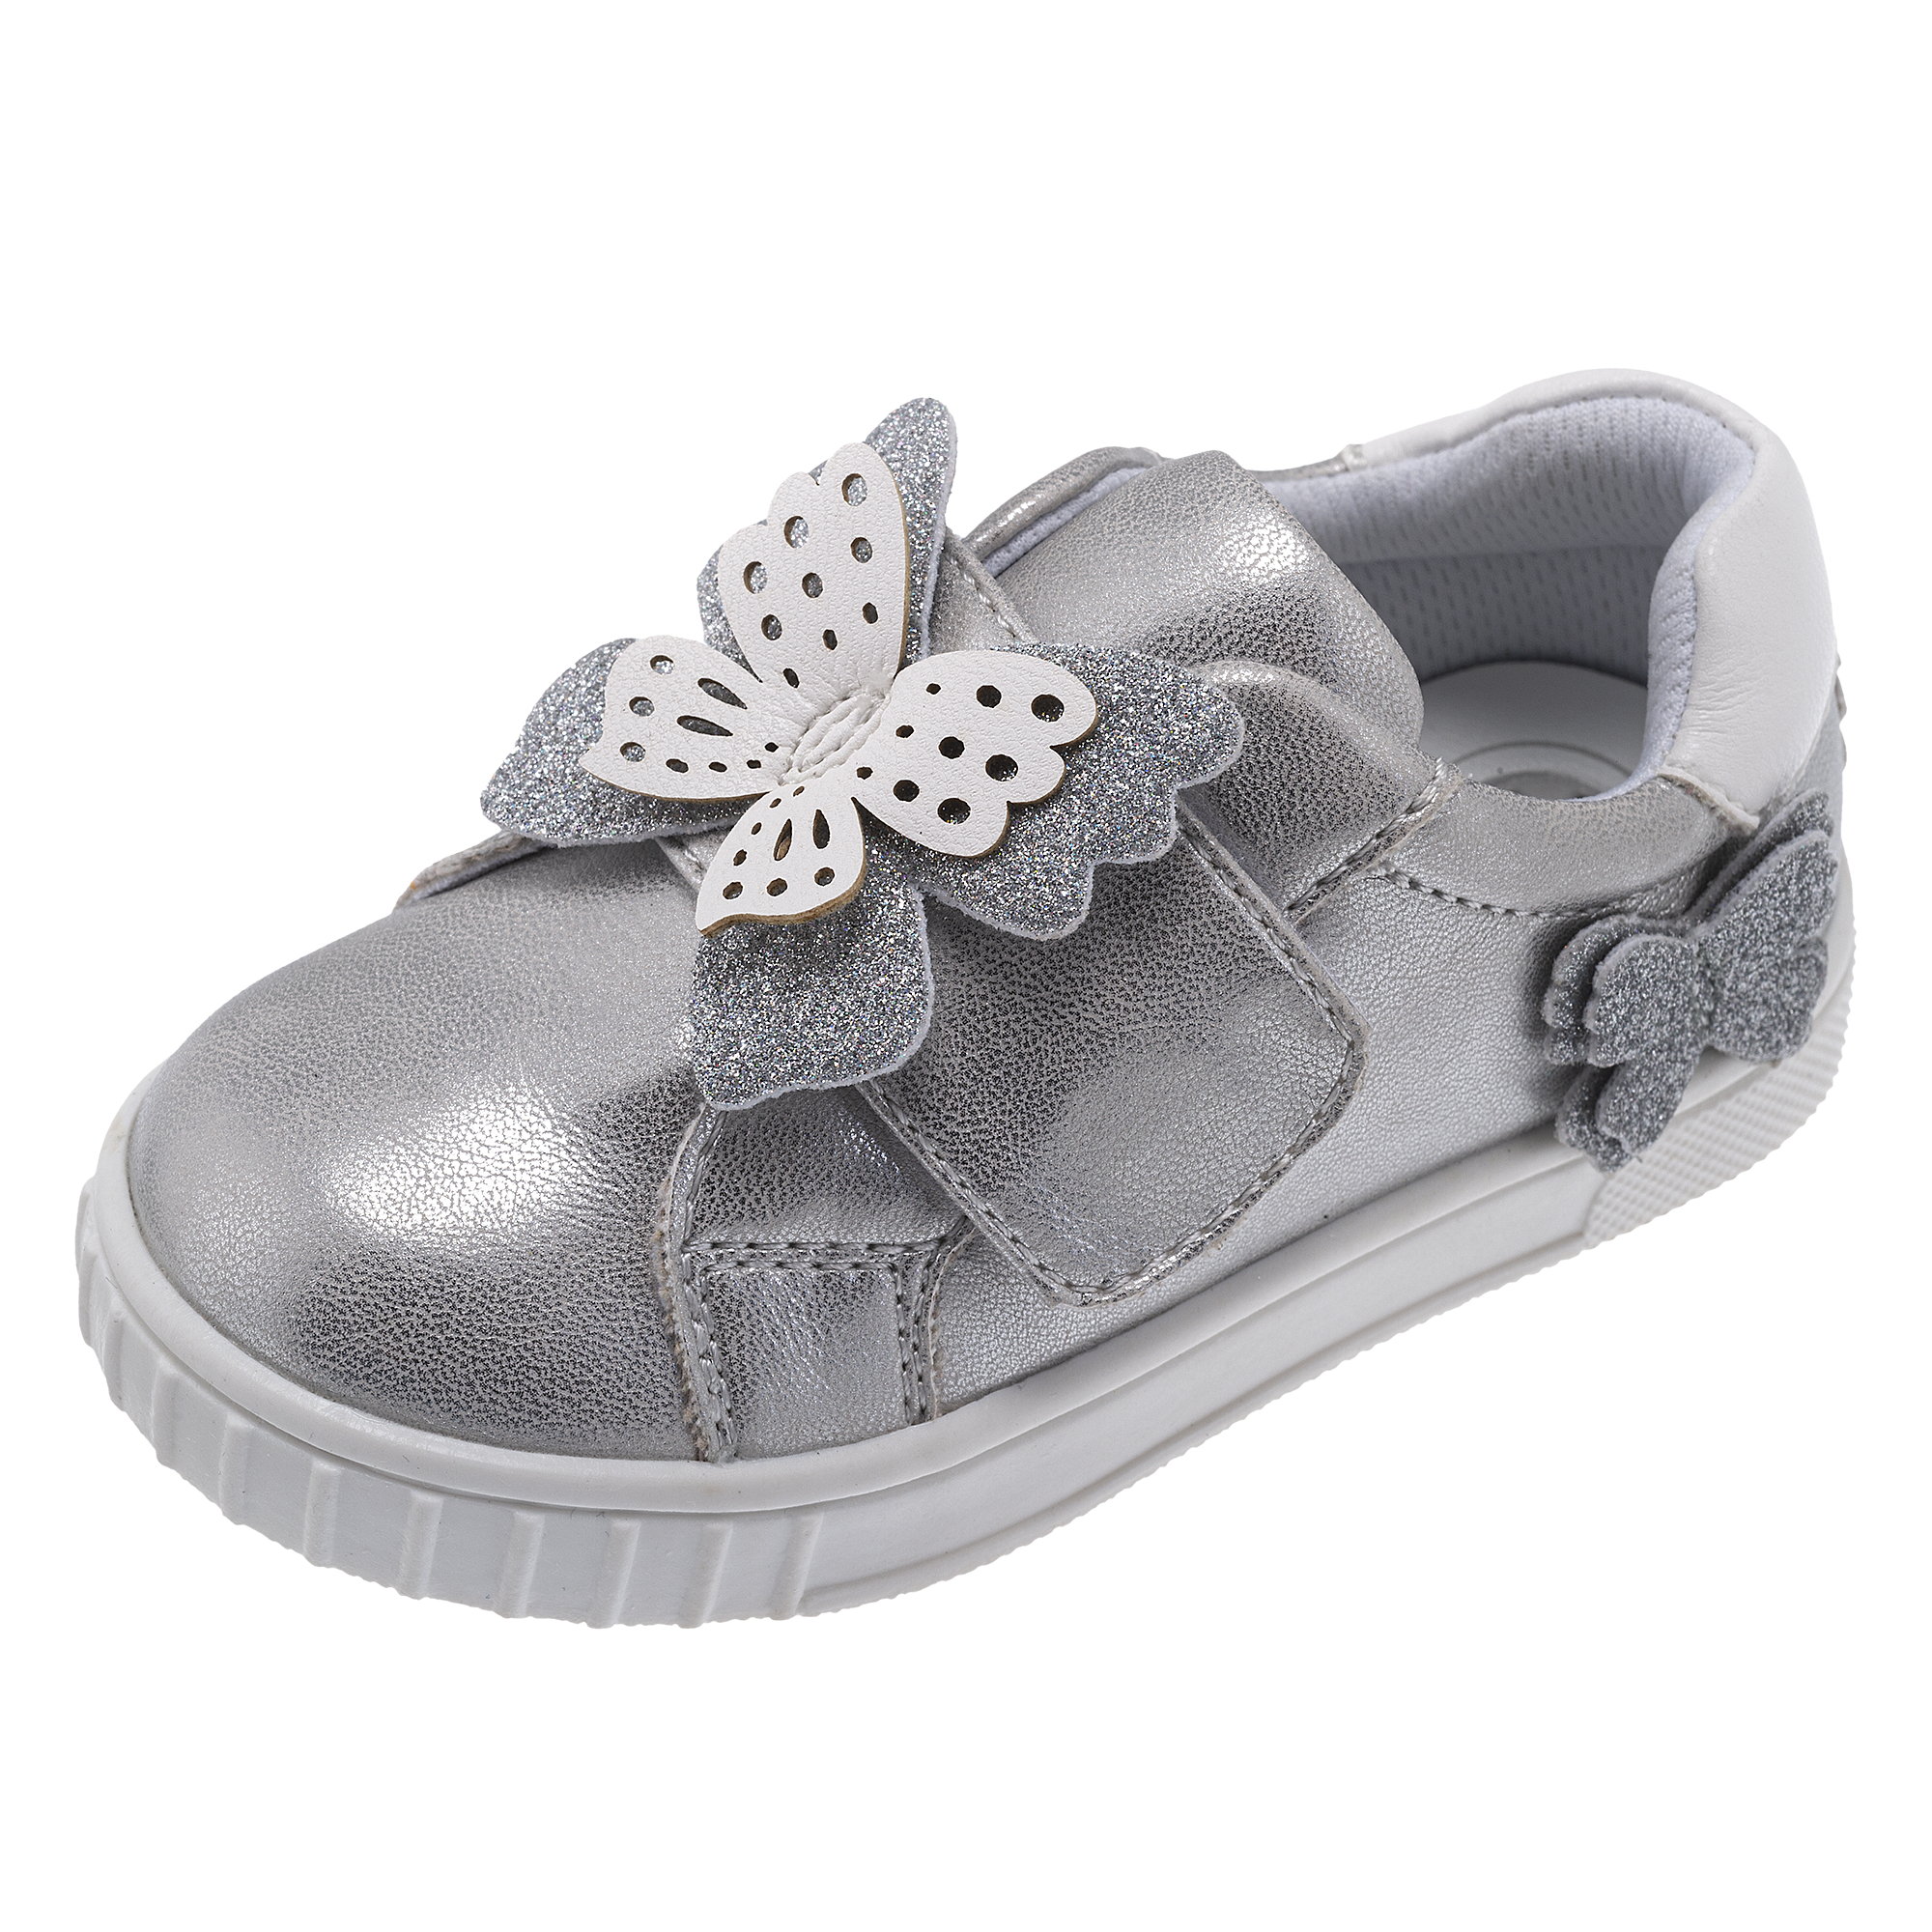 Pantof copii Chicco Cesca, argintiu, 69163-64P